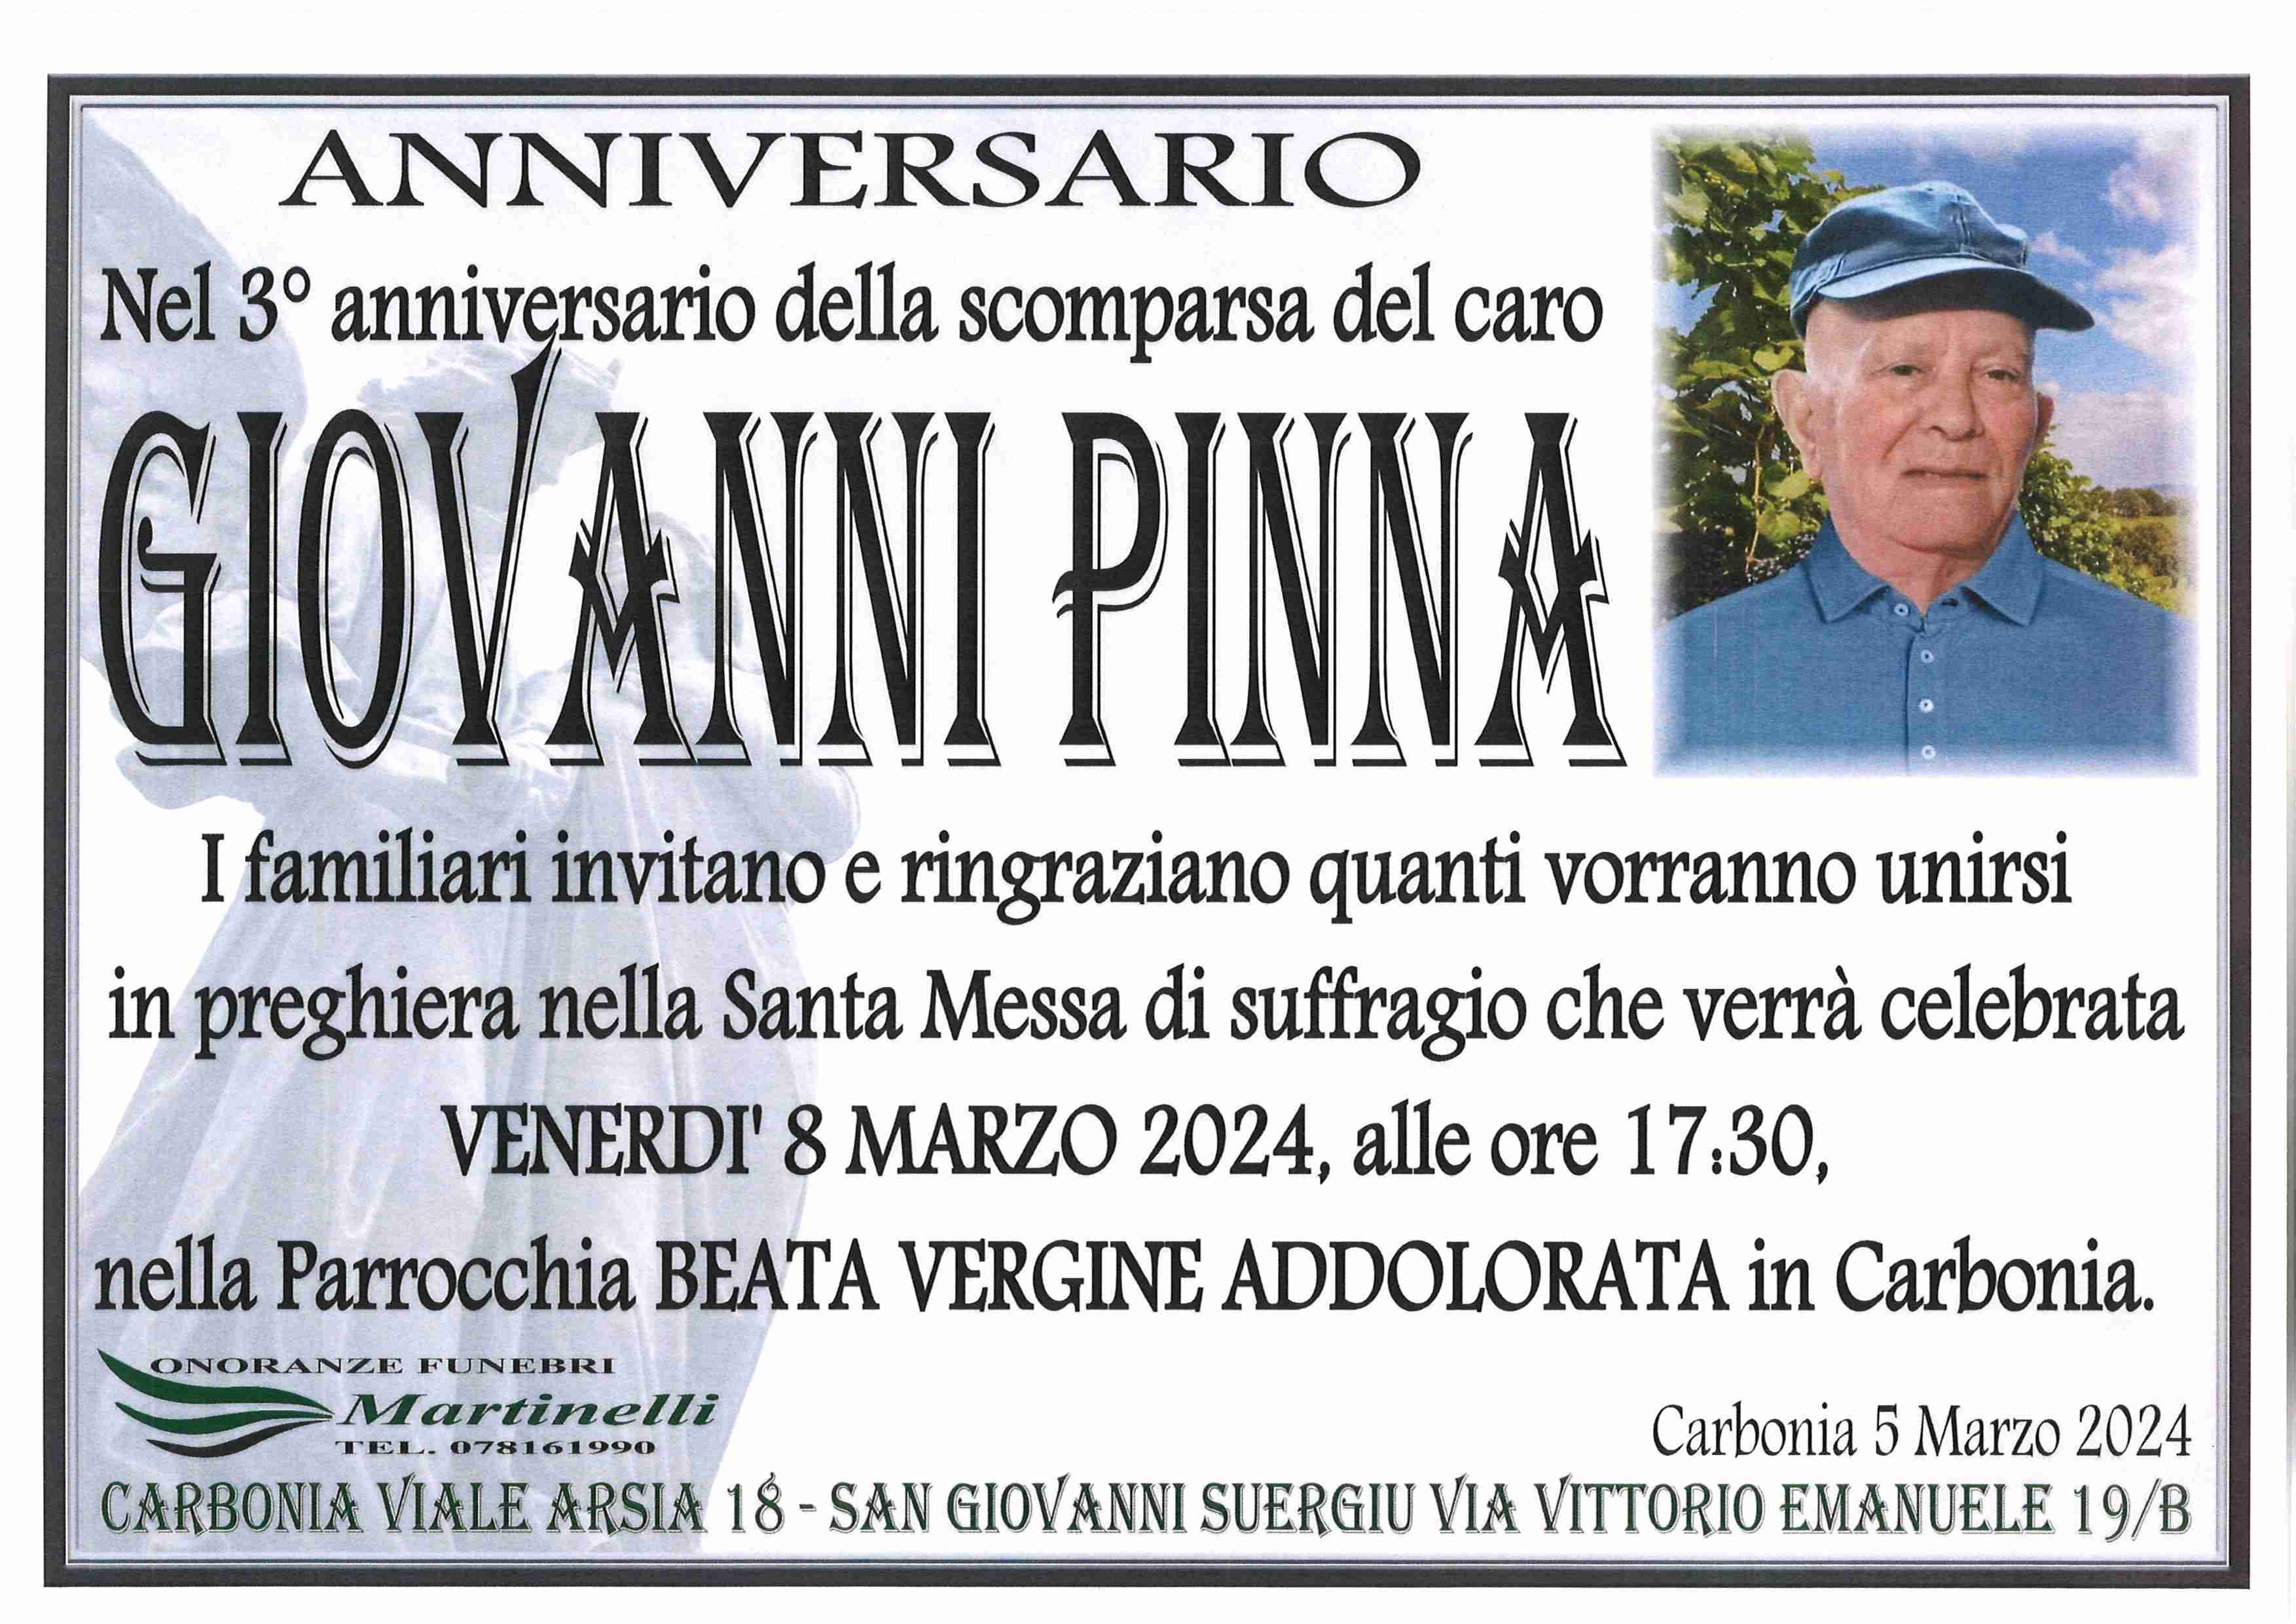 Giovanni Pinna